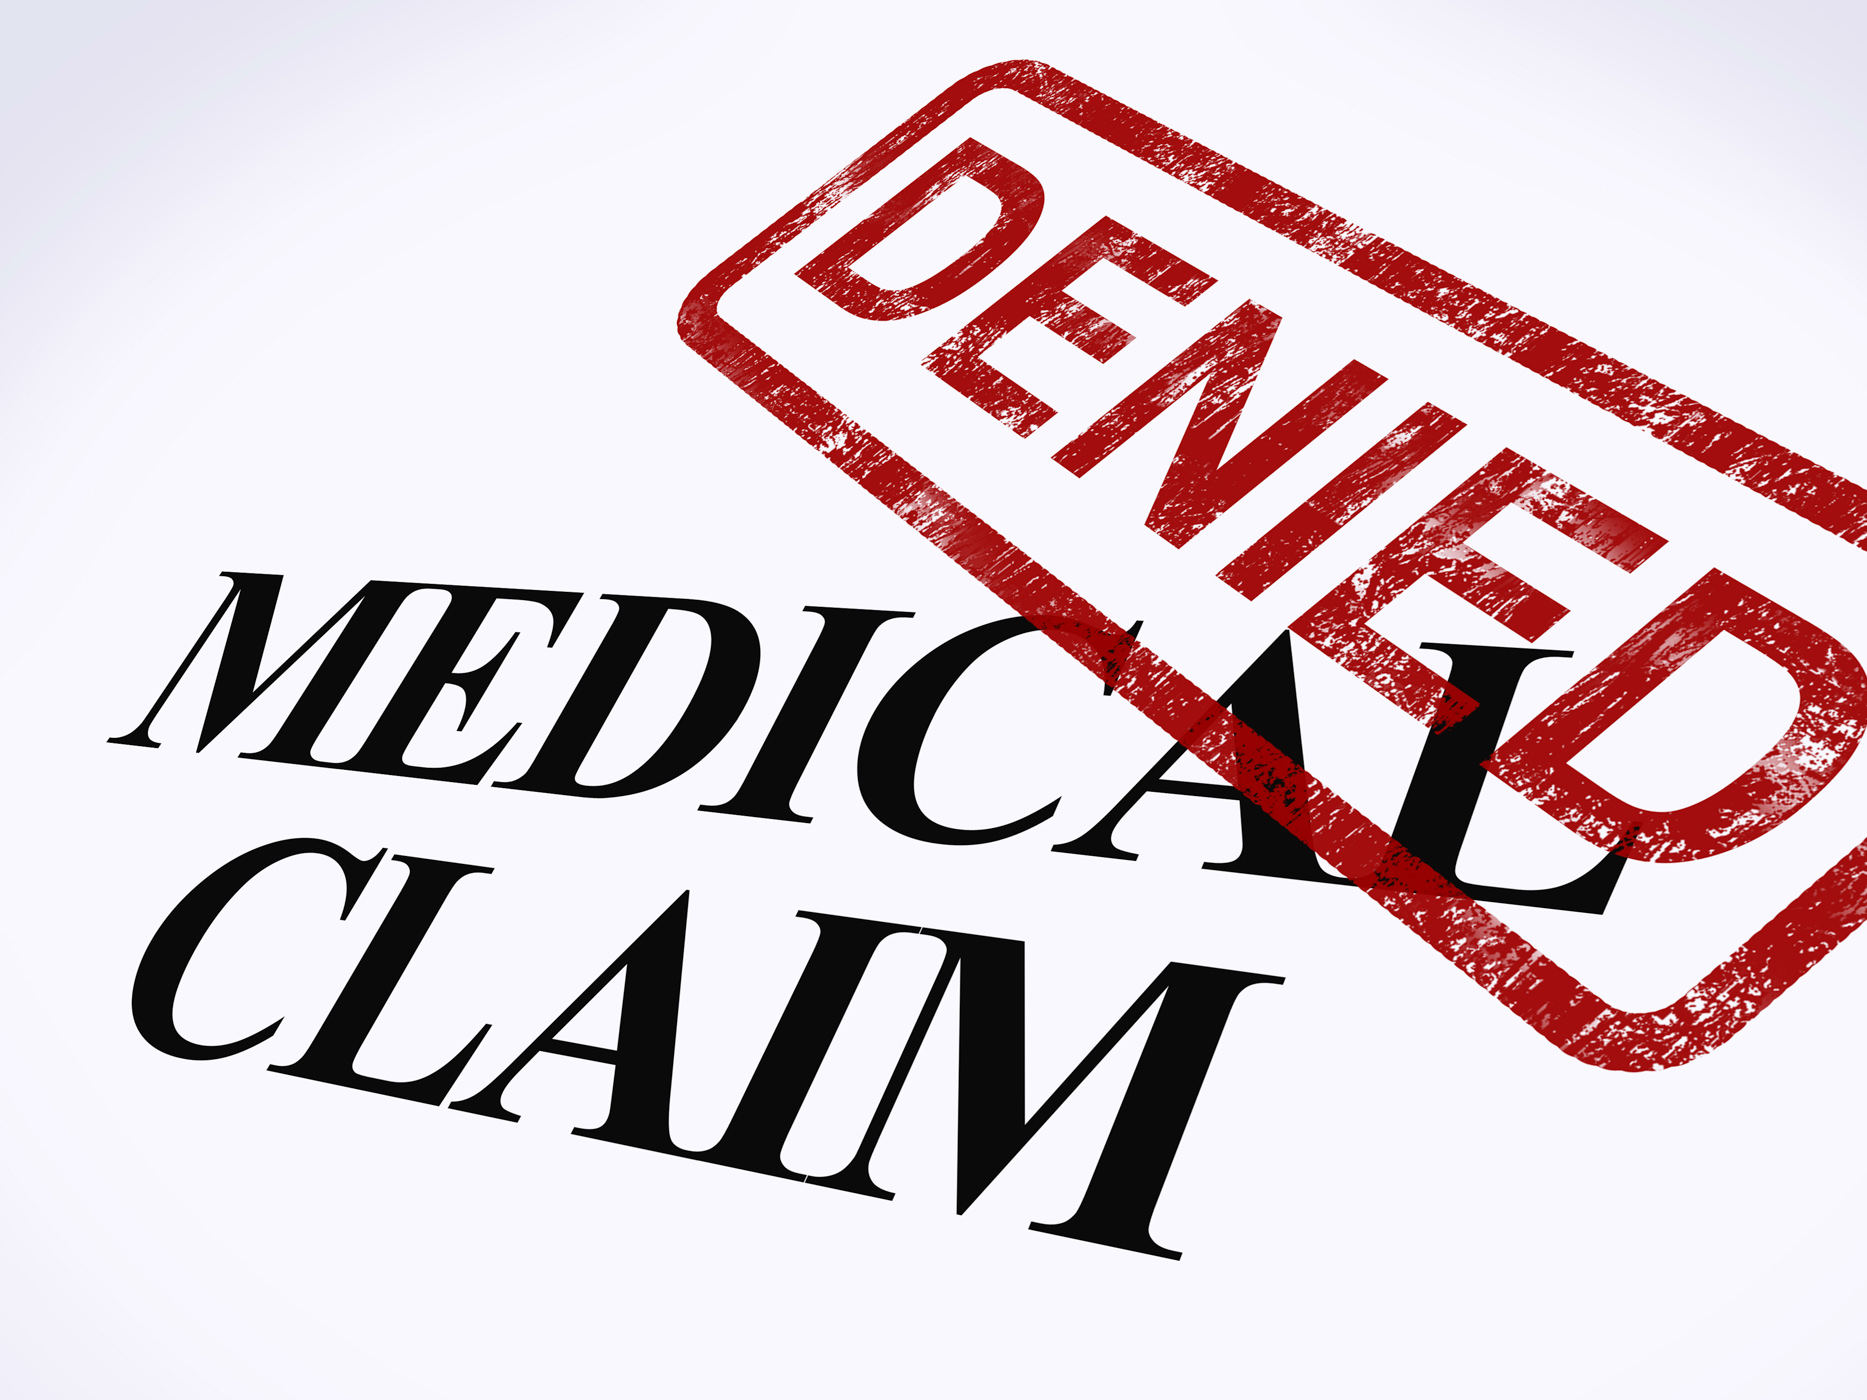 Medical Claim Denied Stamp Shows Unsuccessful Medical Reimbursement, Application, Refuse, Paperwork, Patient, HQ Photo